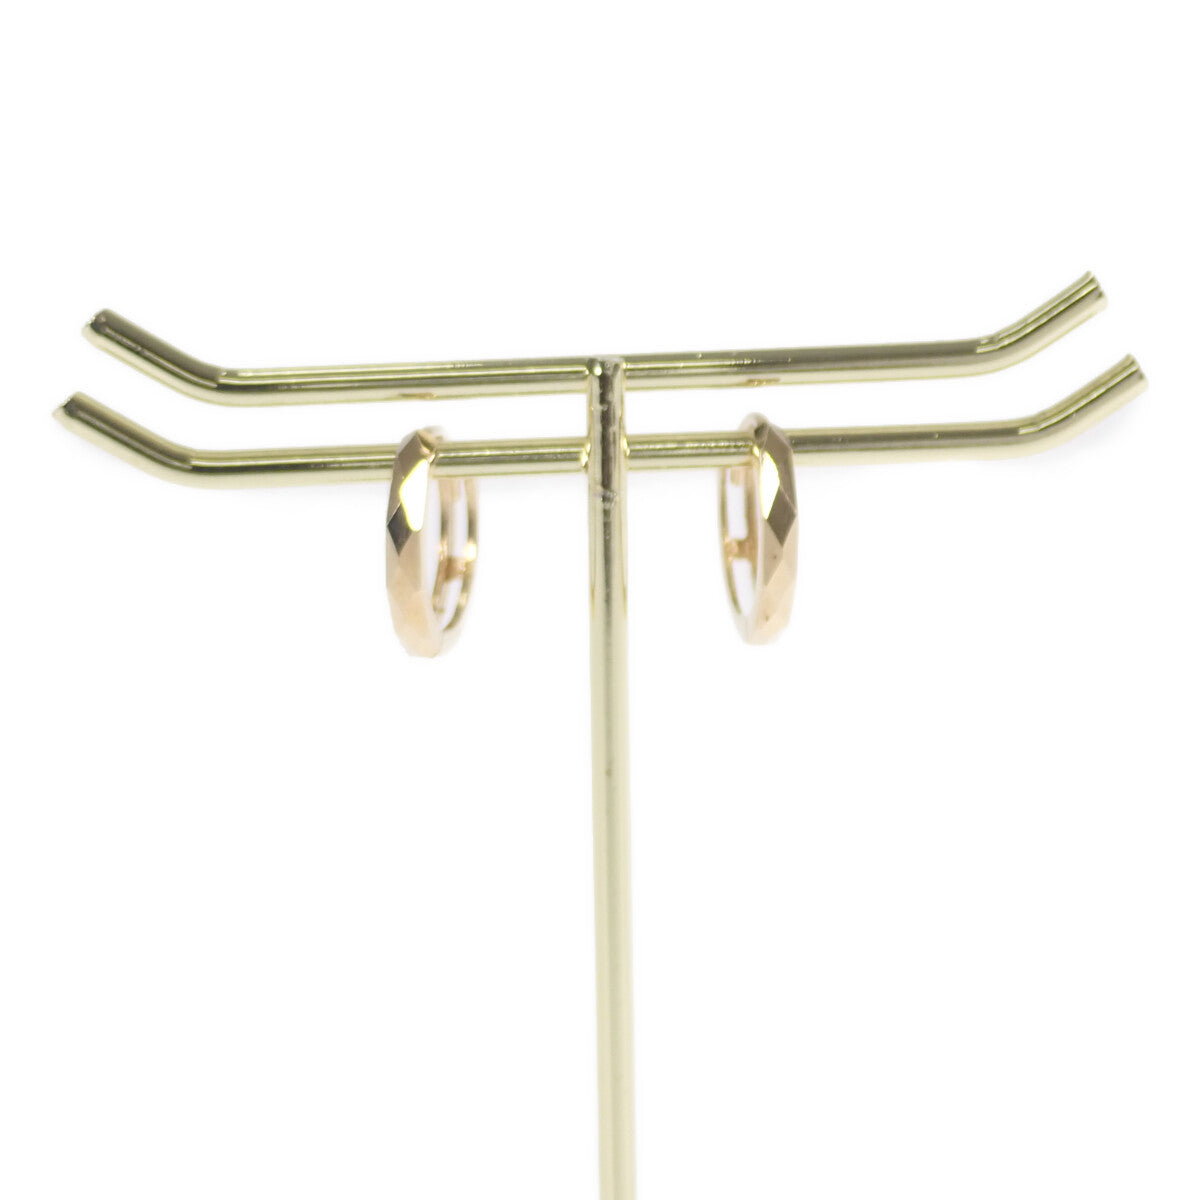 LuxUness  K18 Yellow Gold Design Hoop Earrings for Women - Unused Preloved in Brand new